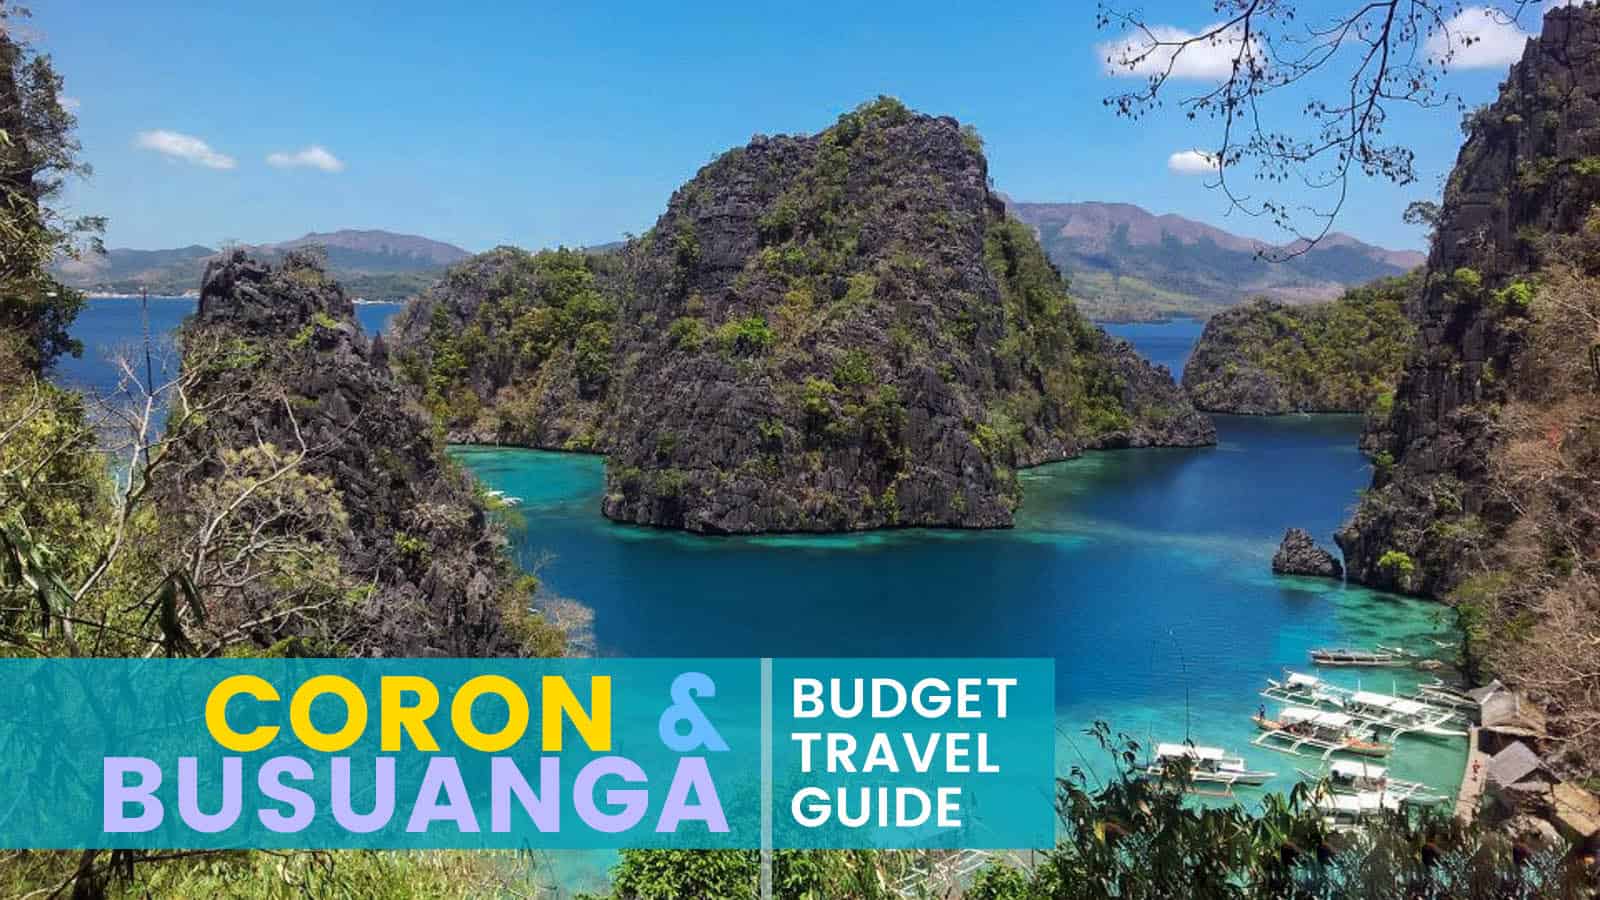 Coron and Busuanga: Budget Travel Guide